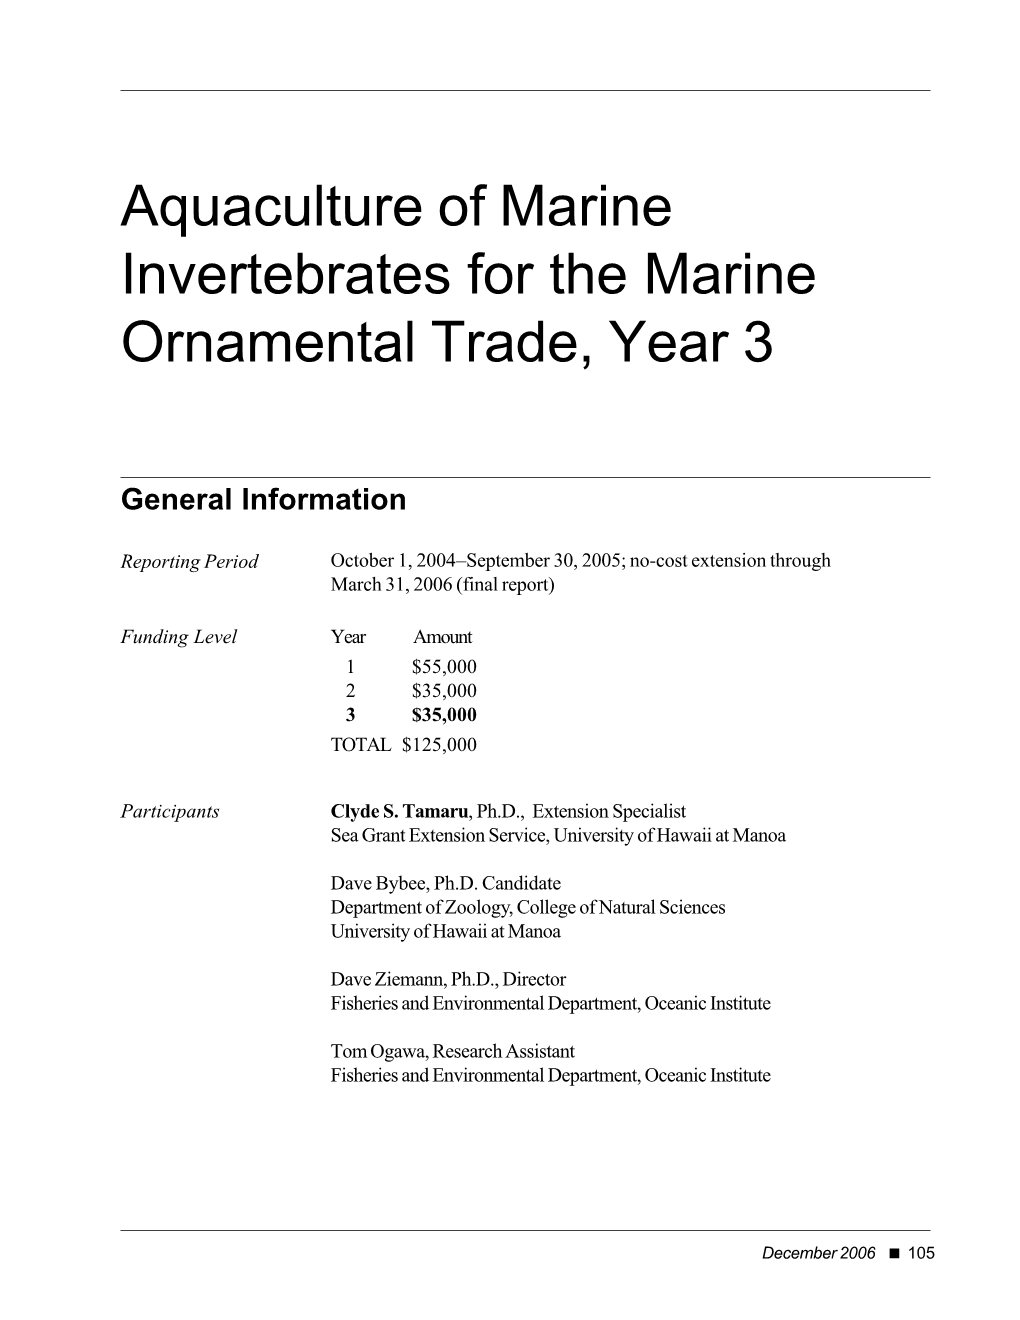 Aquaculture of Marine Invertebrates for the Marine Ornamental Trade, Year 3